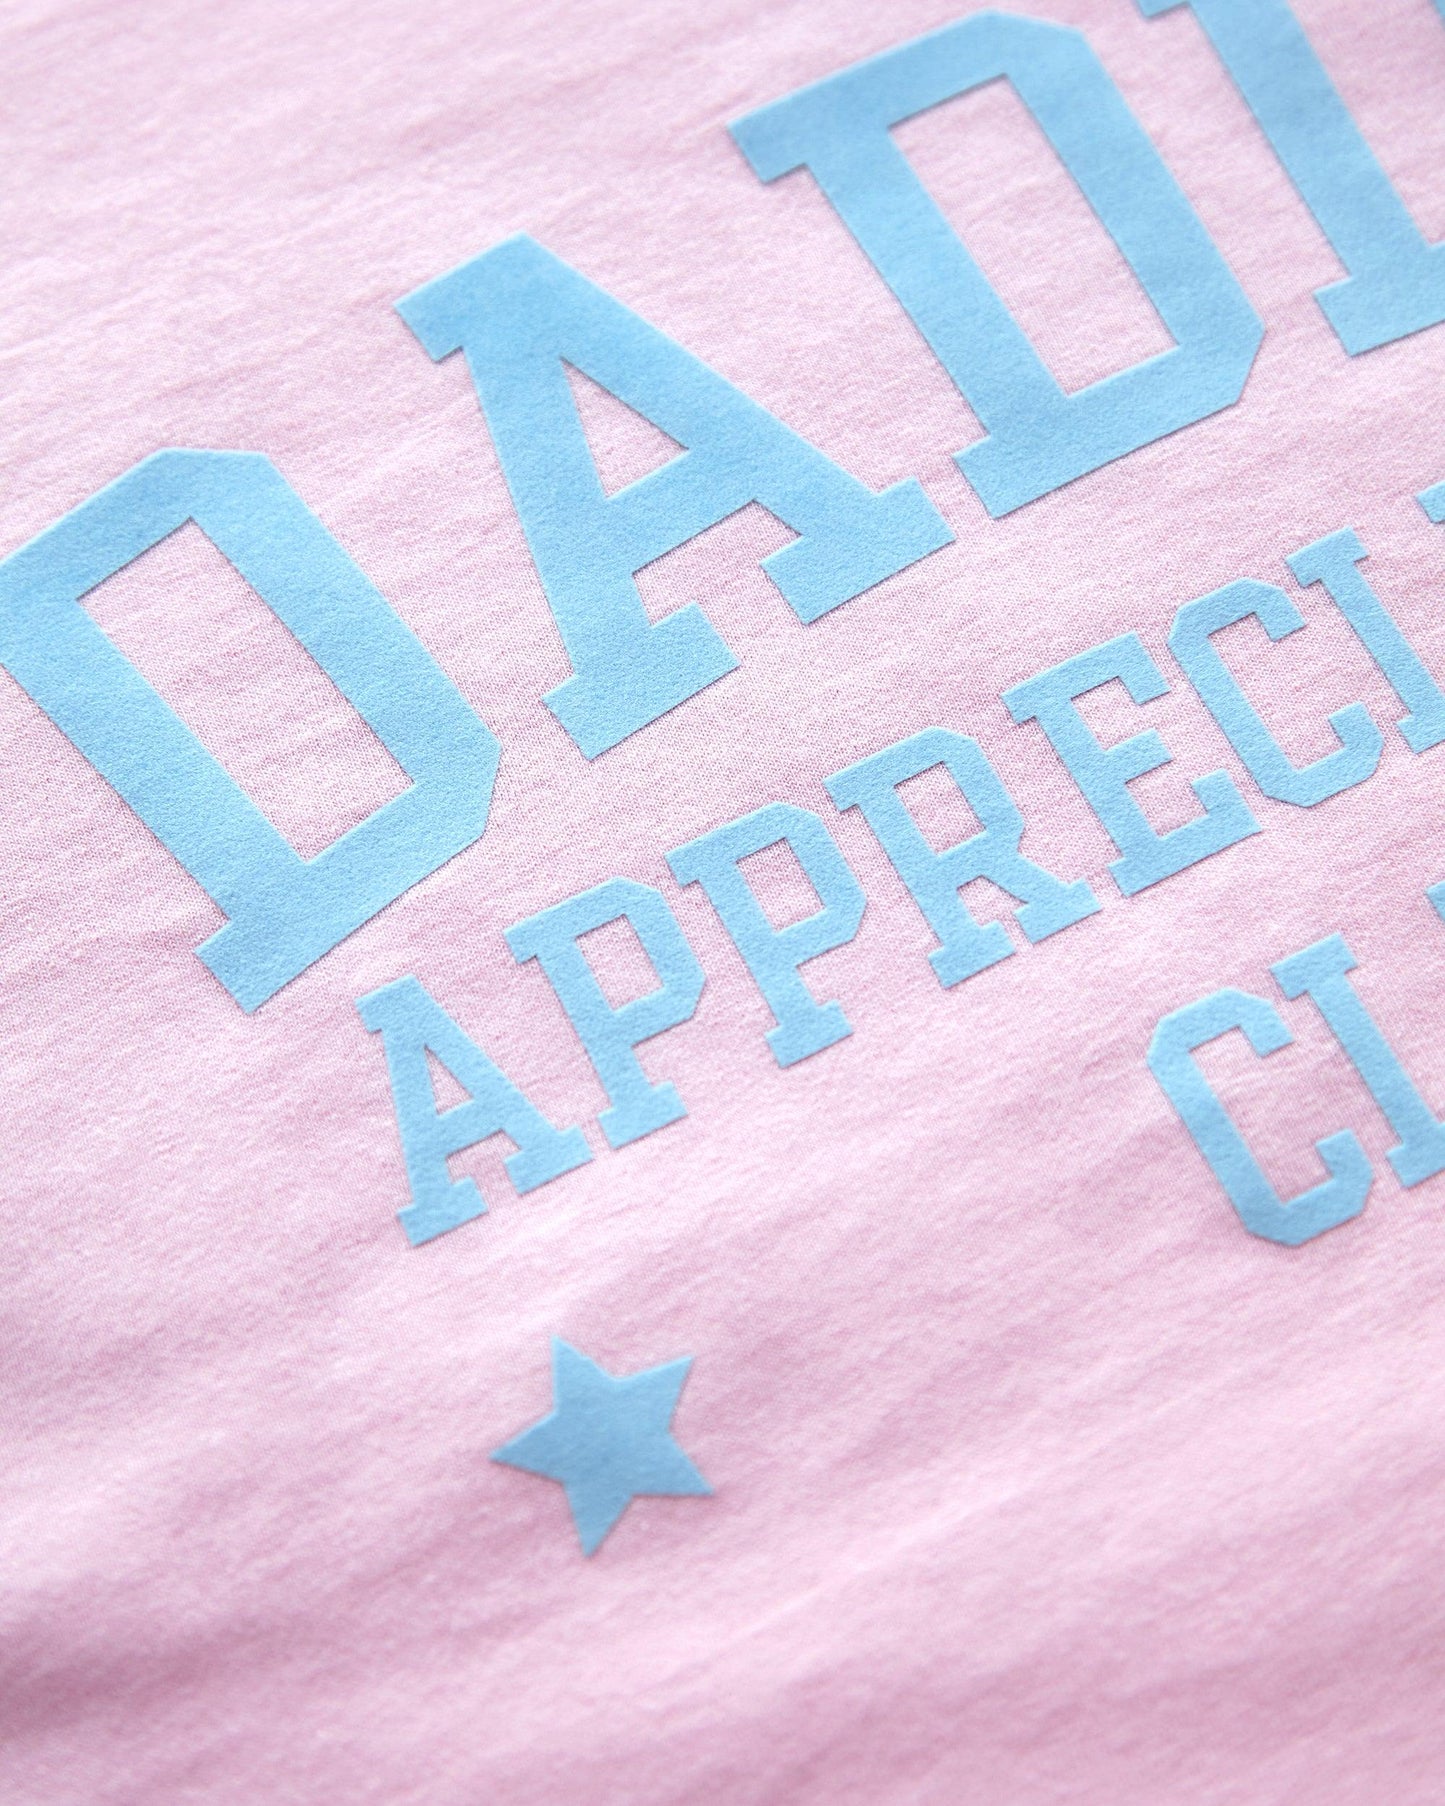 Daddy appreciation club, light blue flock on pink - mens crop top. - HOMOLONDON